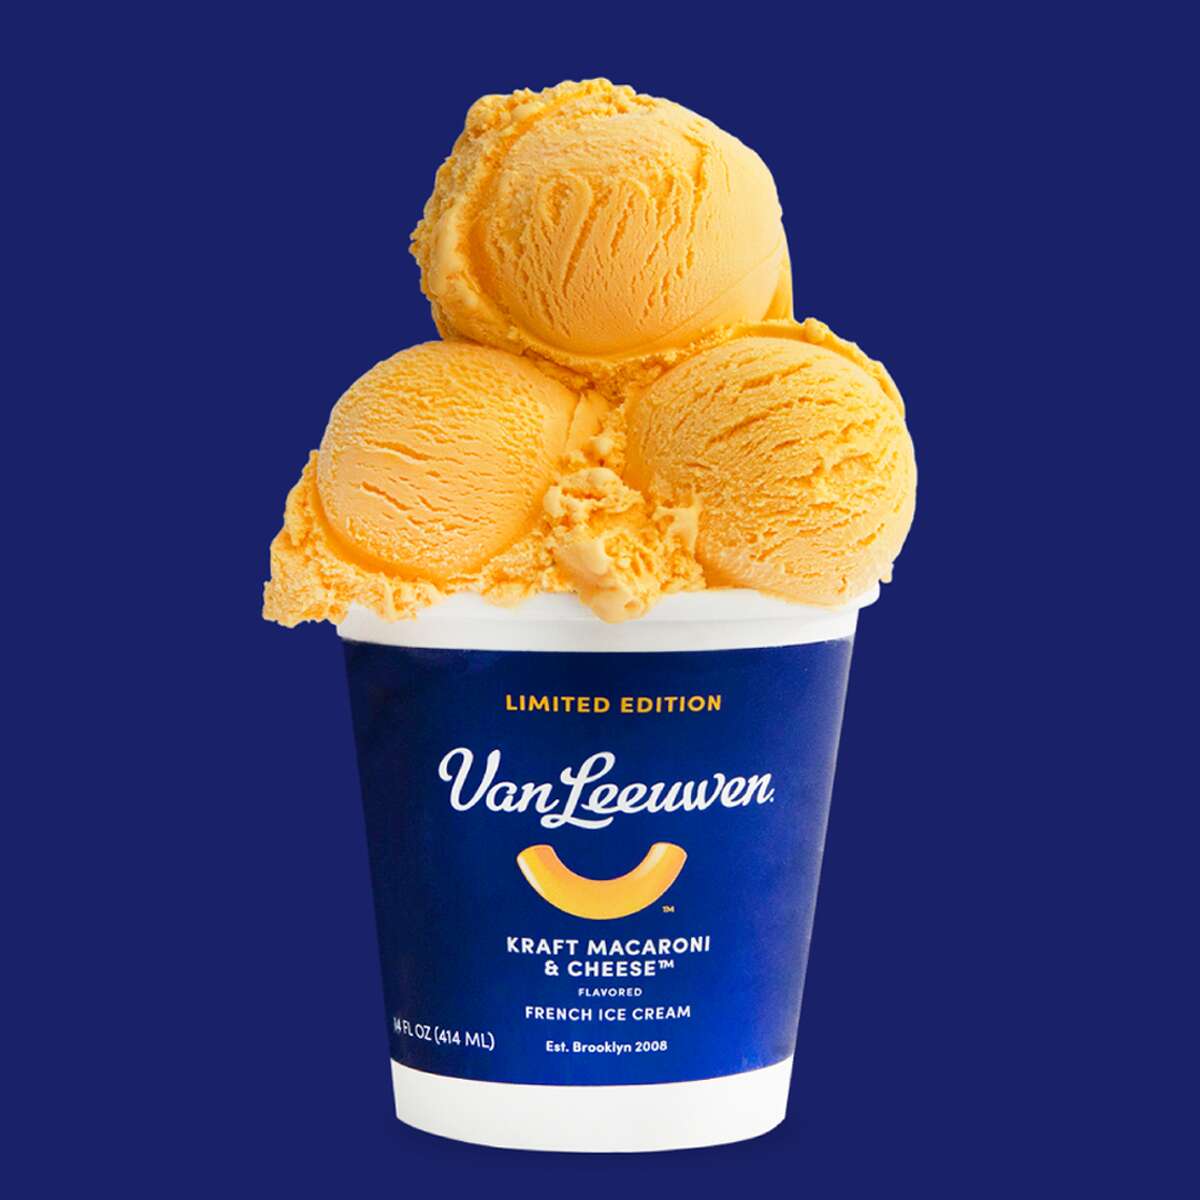 Van Leeuwen Ice Cream's Kraft Macaroni & Cheese is coming to Walmart stores Monday.